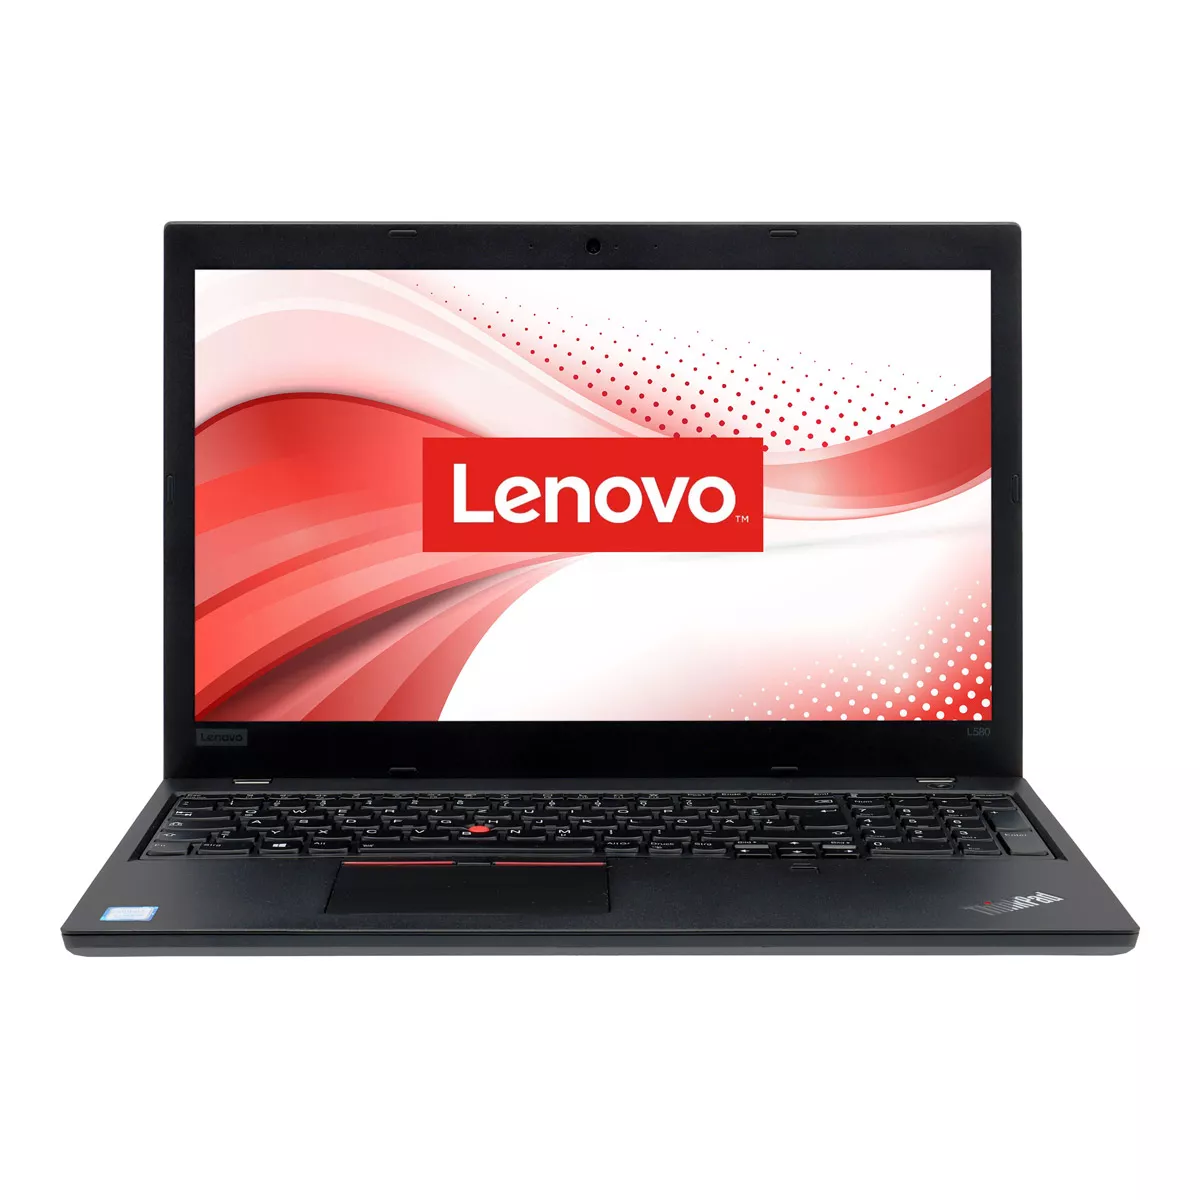 Lenovo ThinkPad L580 Core i3 8130U Full-HD 4 GB 120 GB SSD Webcam A